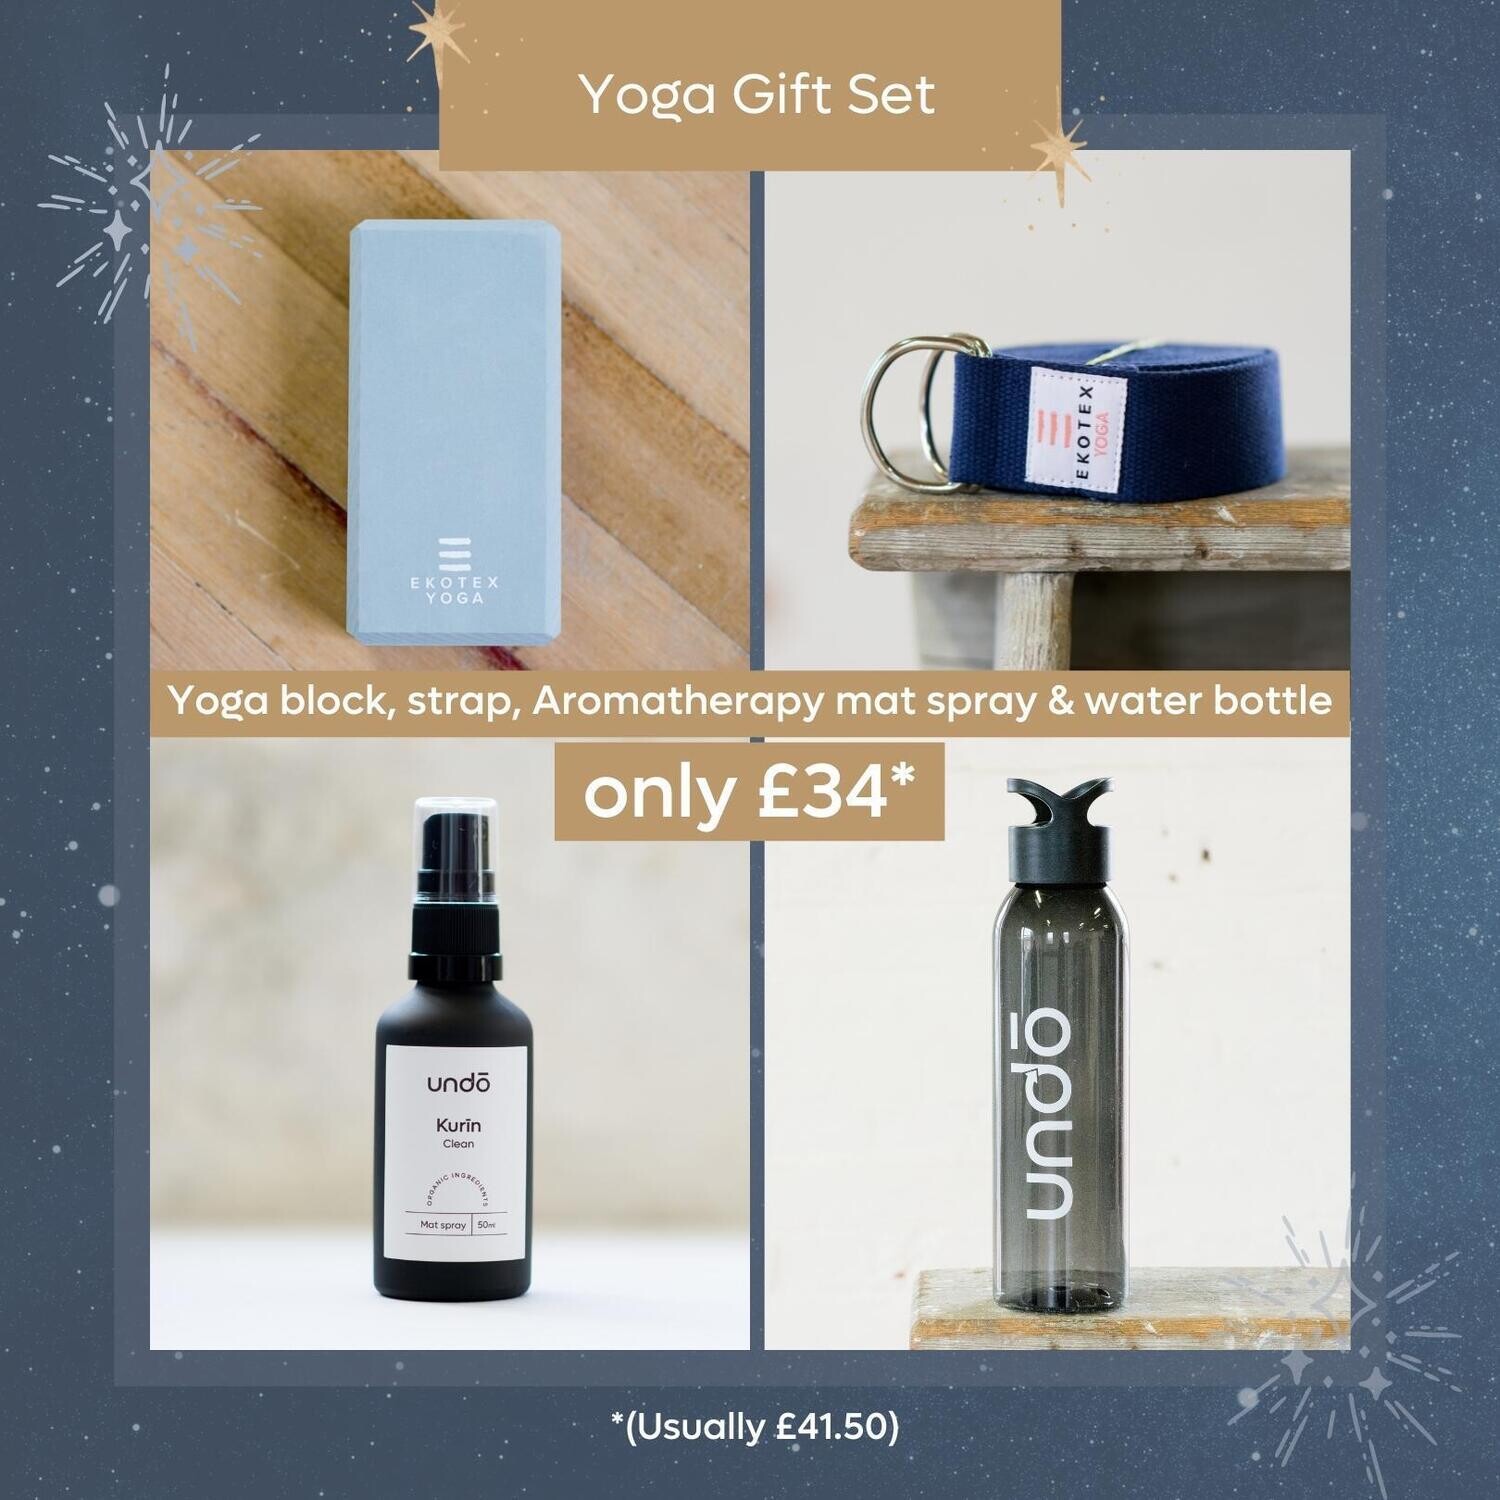 Yoga Gift Set